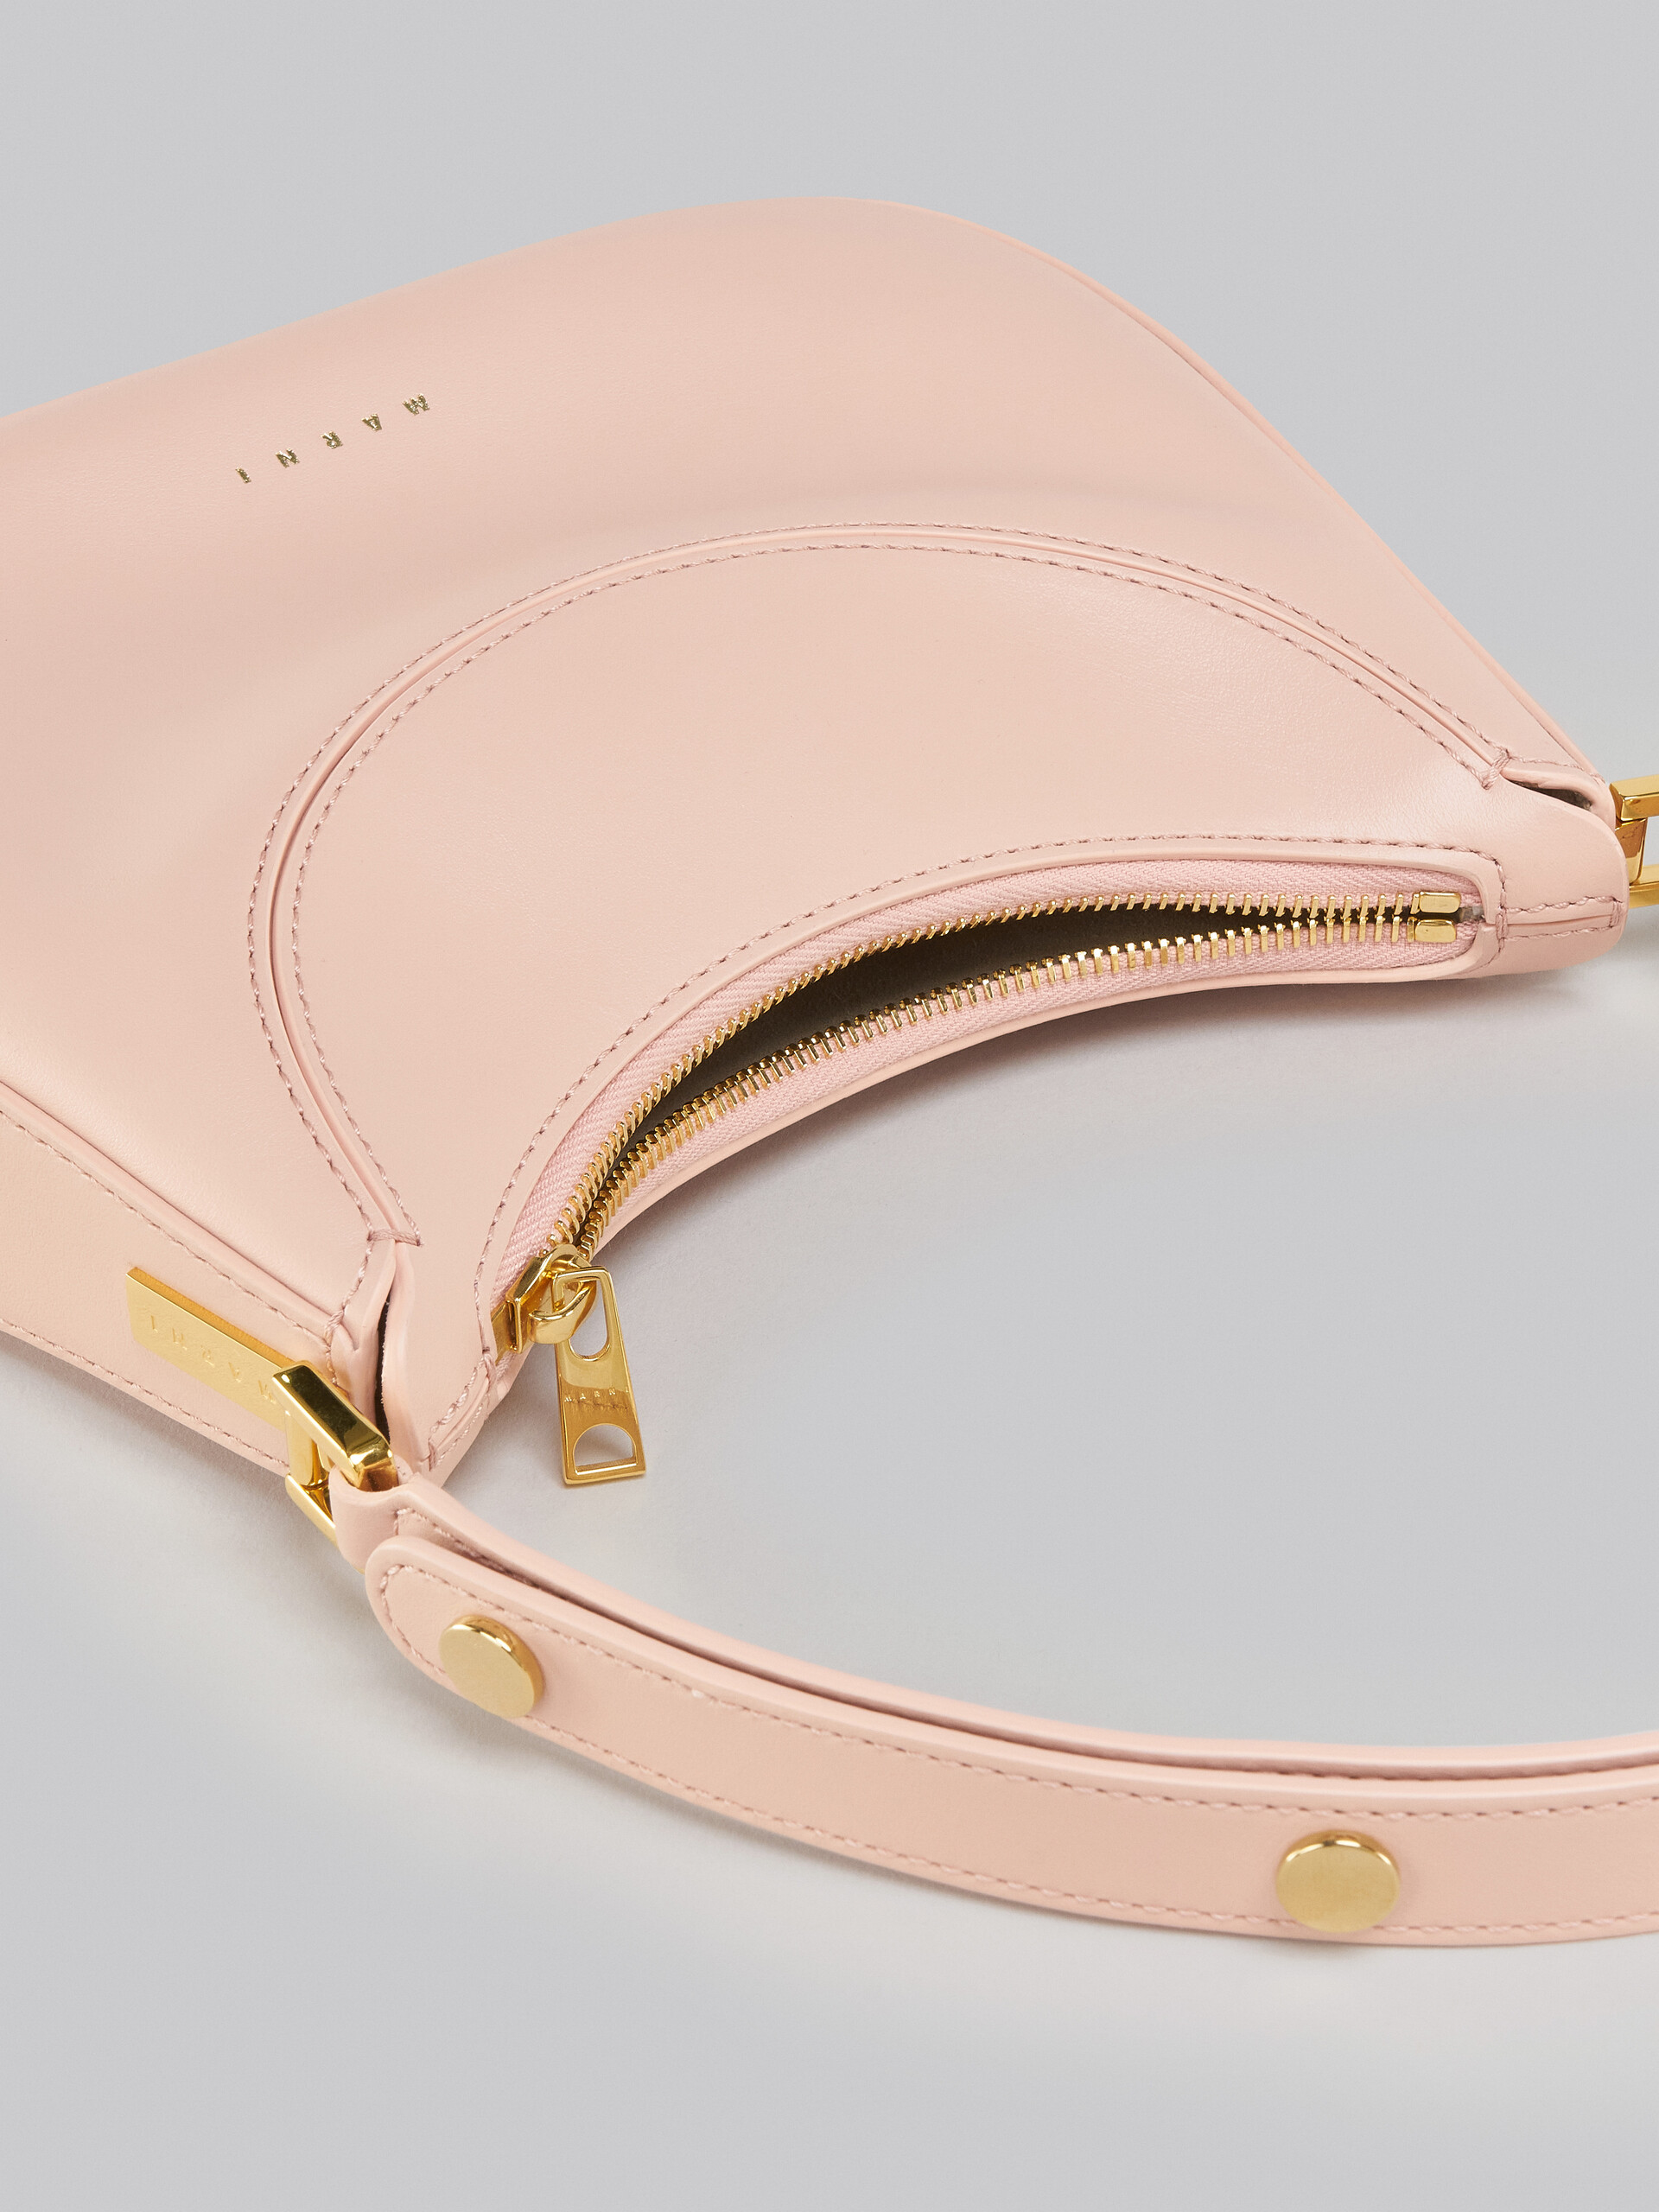 Milano Mini Bag in pink leather - Handbag - Image 3